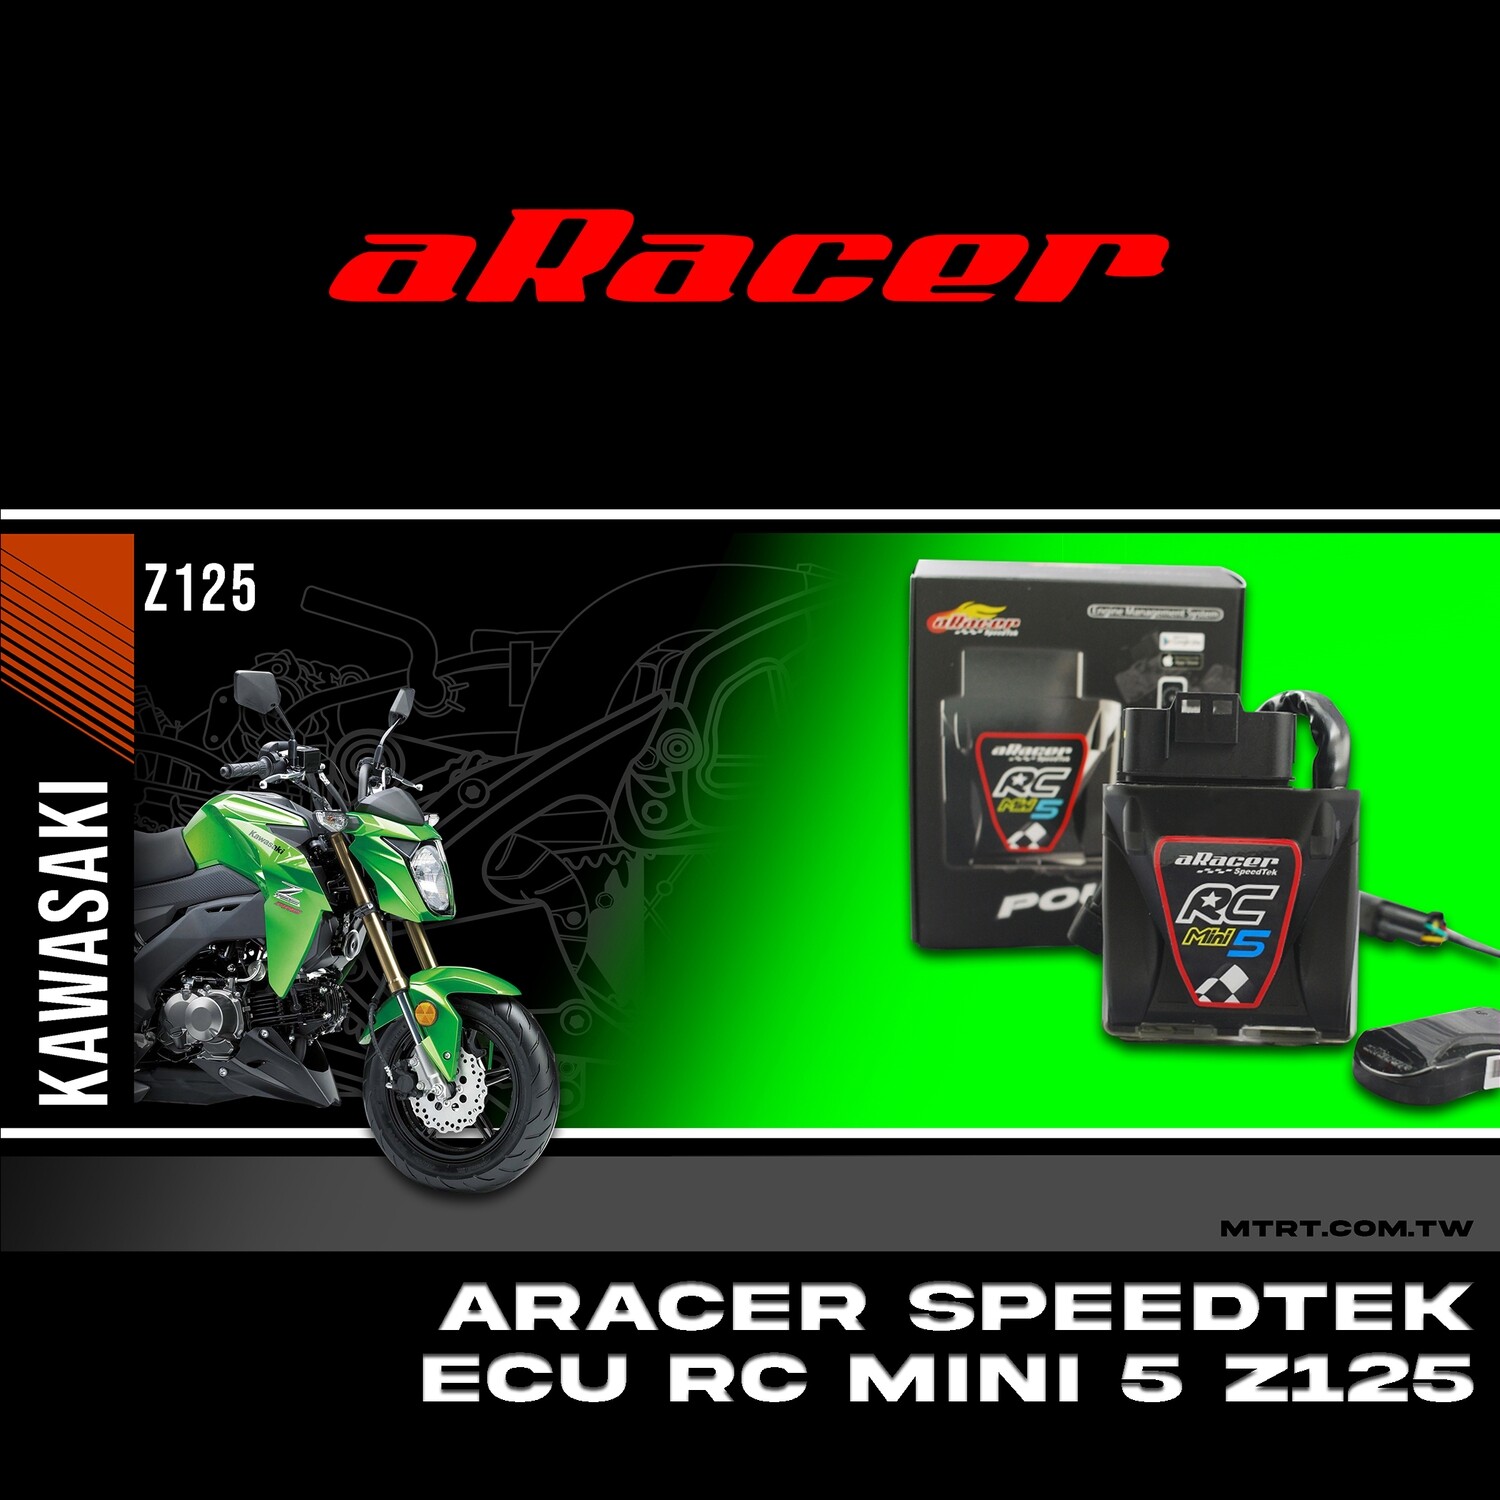 ARACER speedtek ECU RC Mini 5 Z125